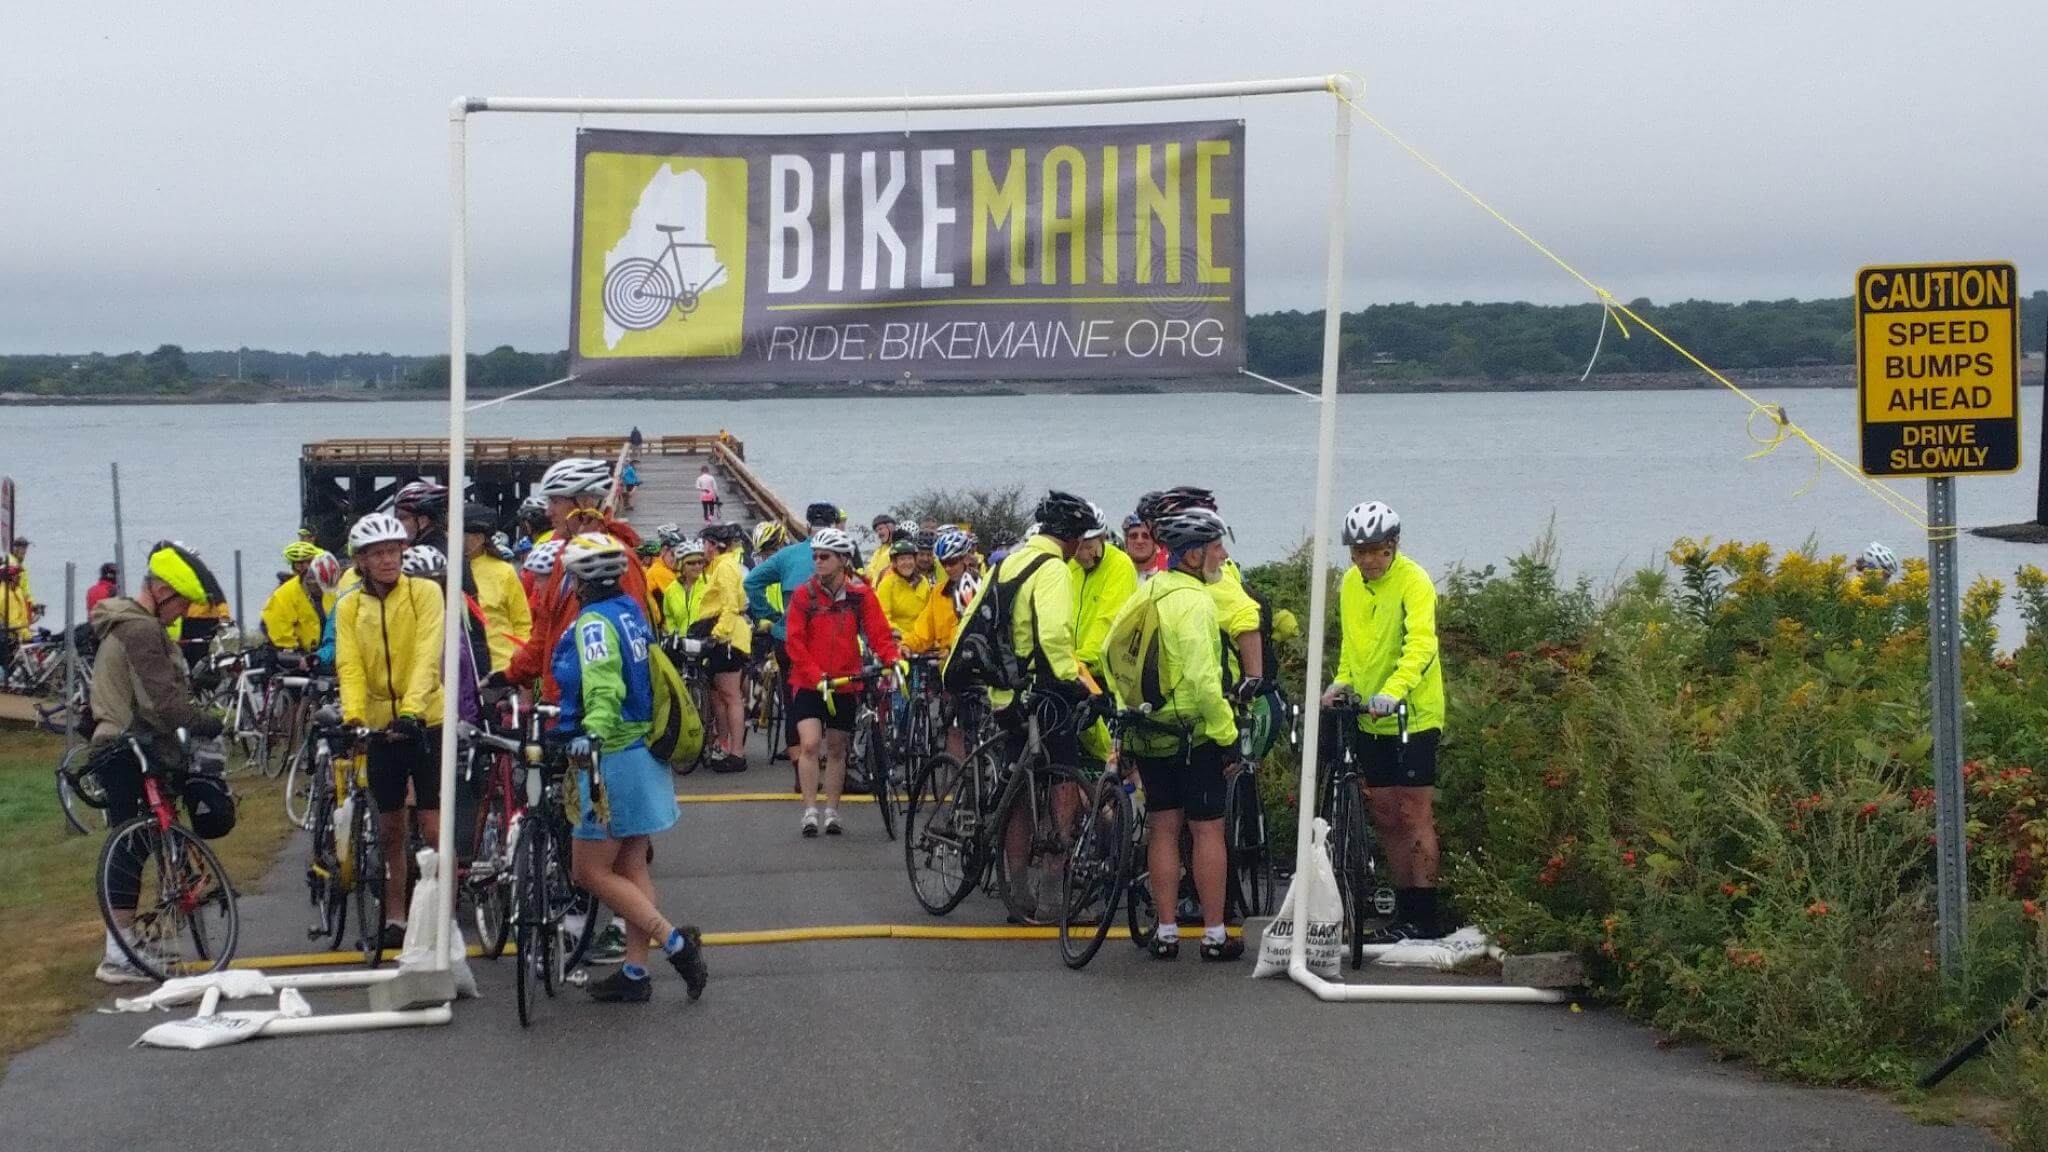 The Bike Maine starting line in Kittery